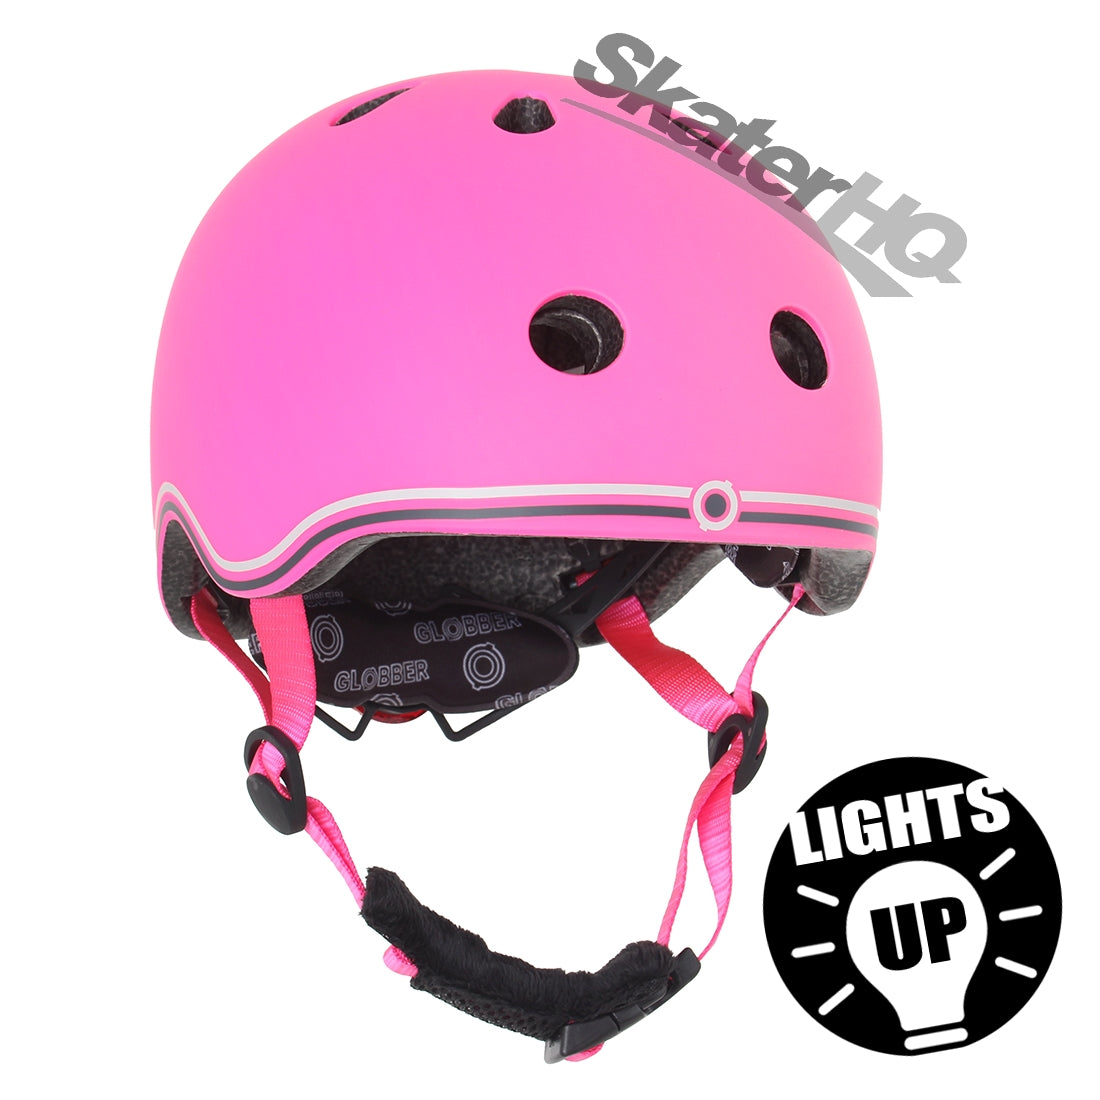 Globber LED Toddler Helmet - Deep Pink - XXS/XS Helmets